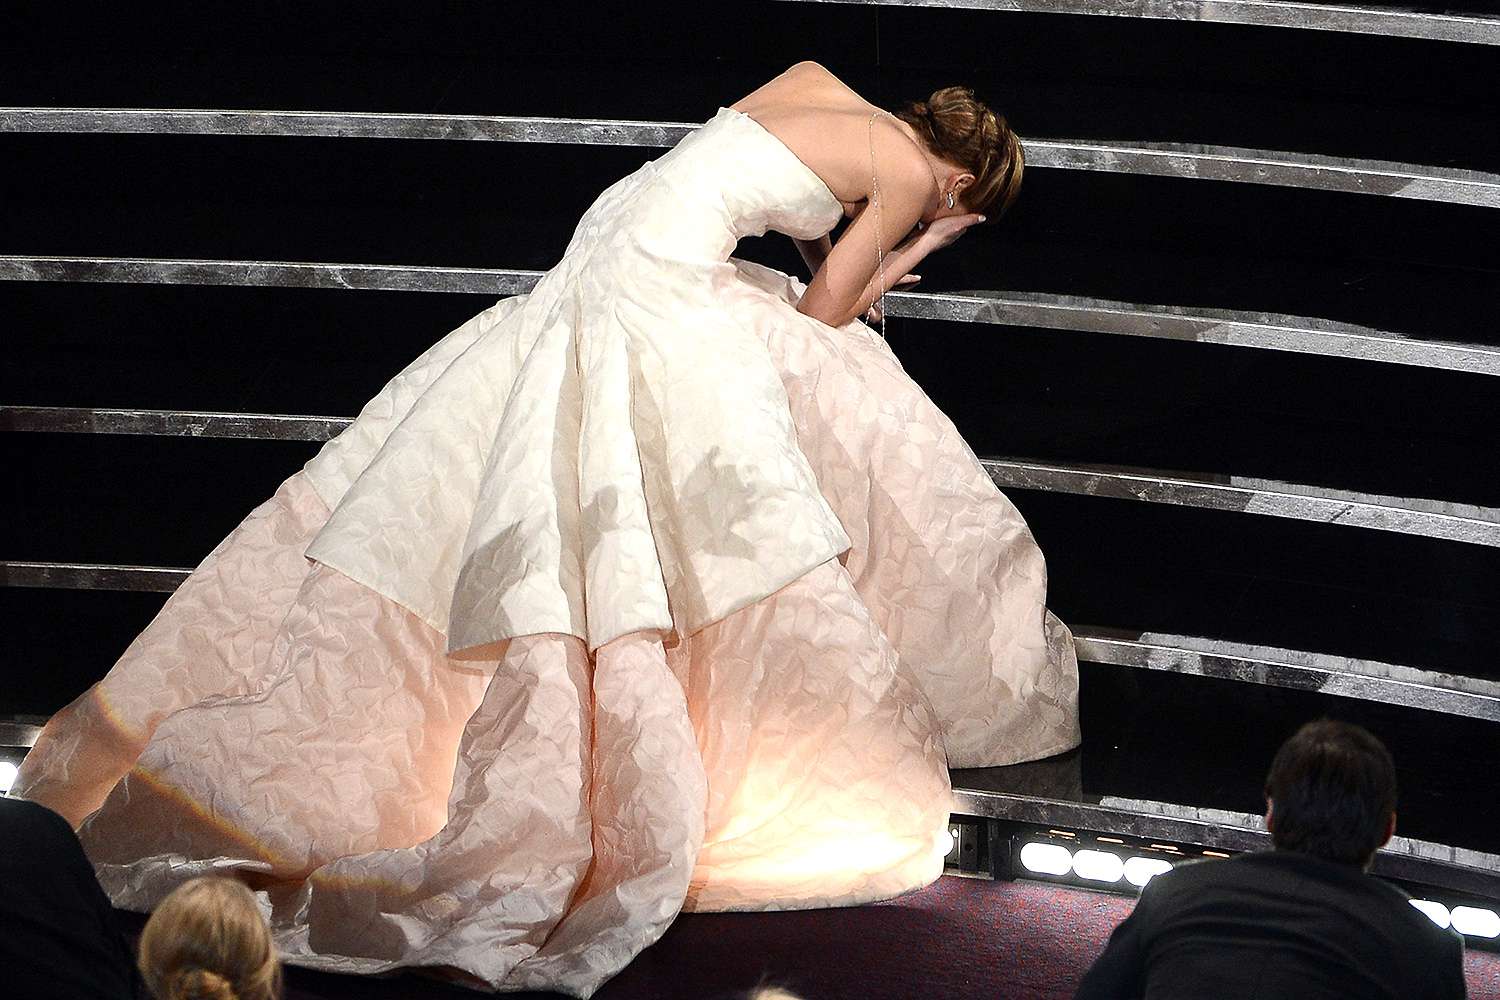 Jennifer Lawrence falls during the Oscars 2013.